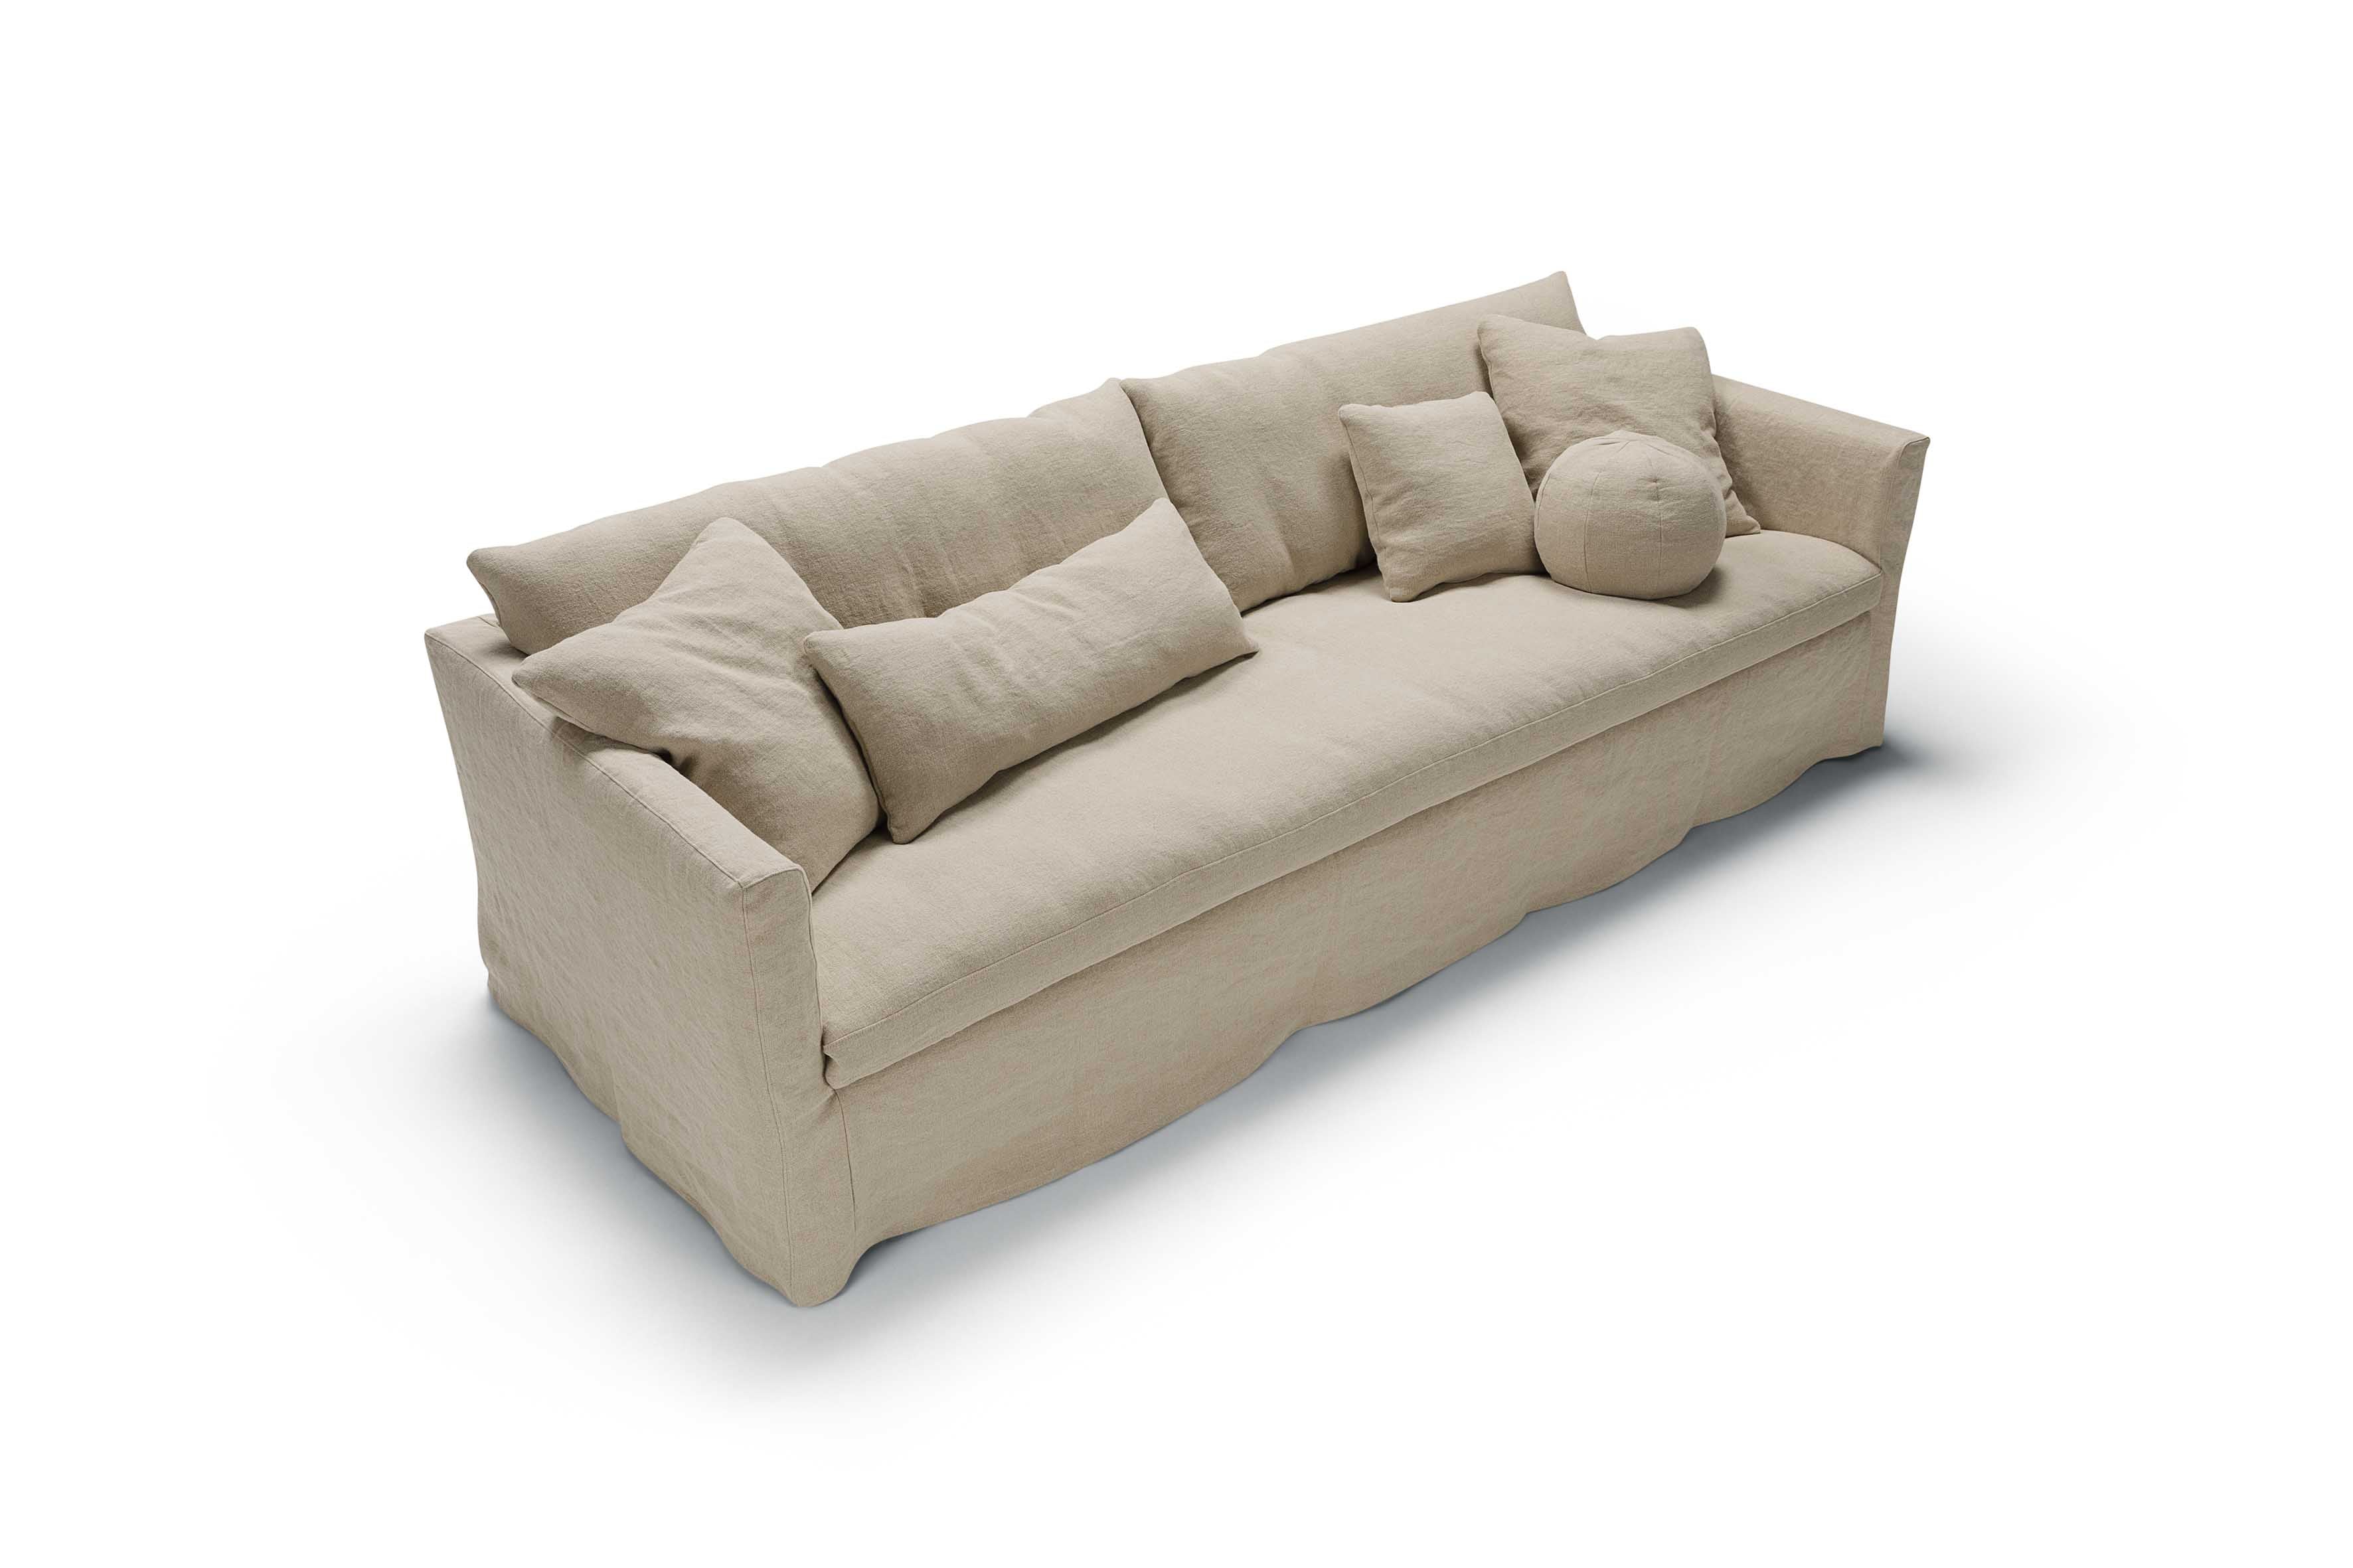 Mastrella Lana 3 Seater Sofa with Loose Cover